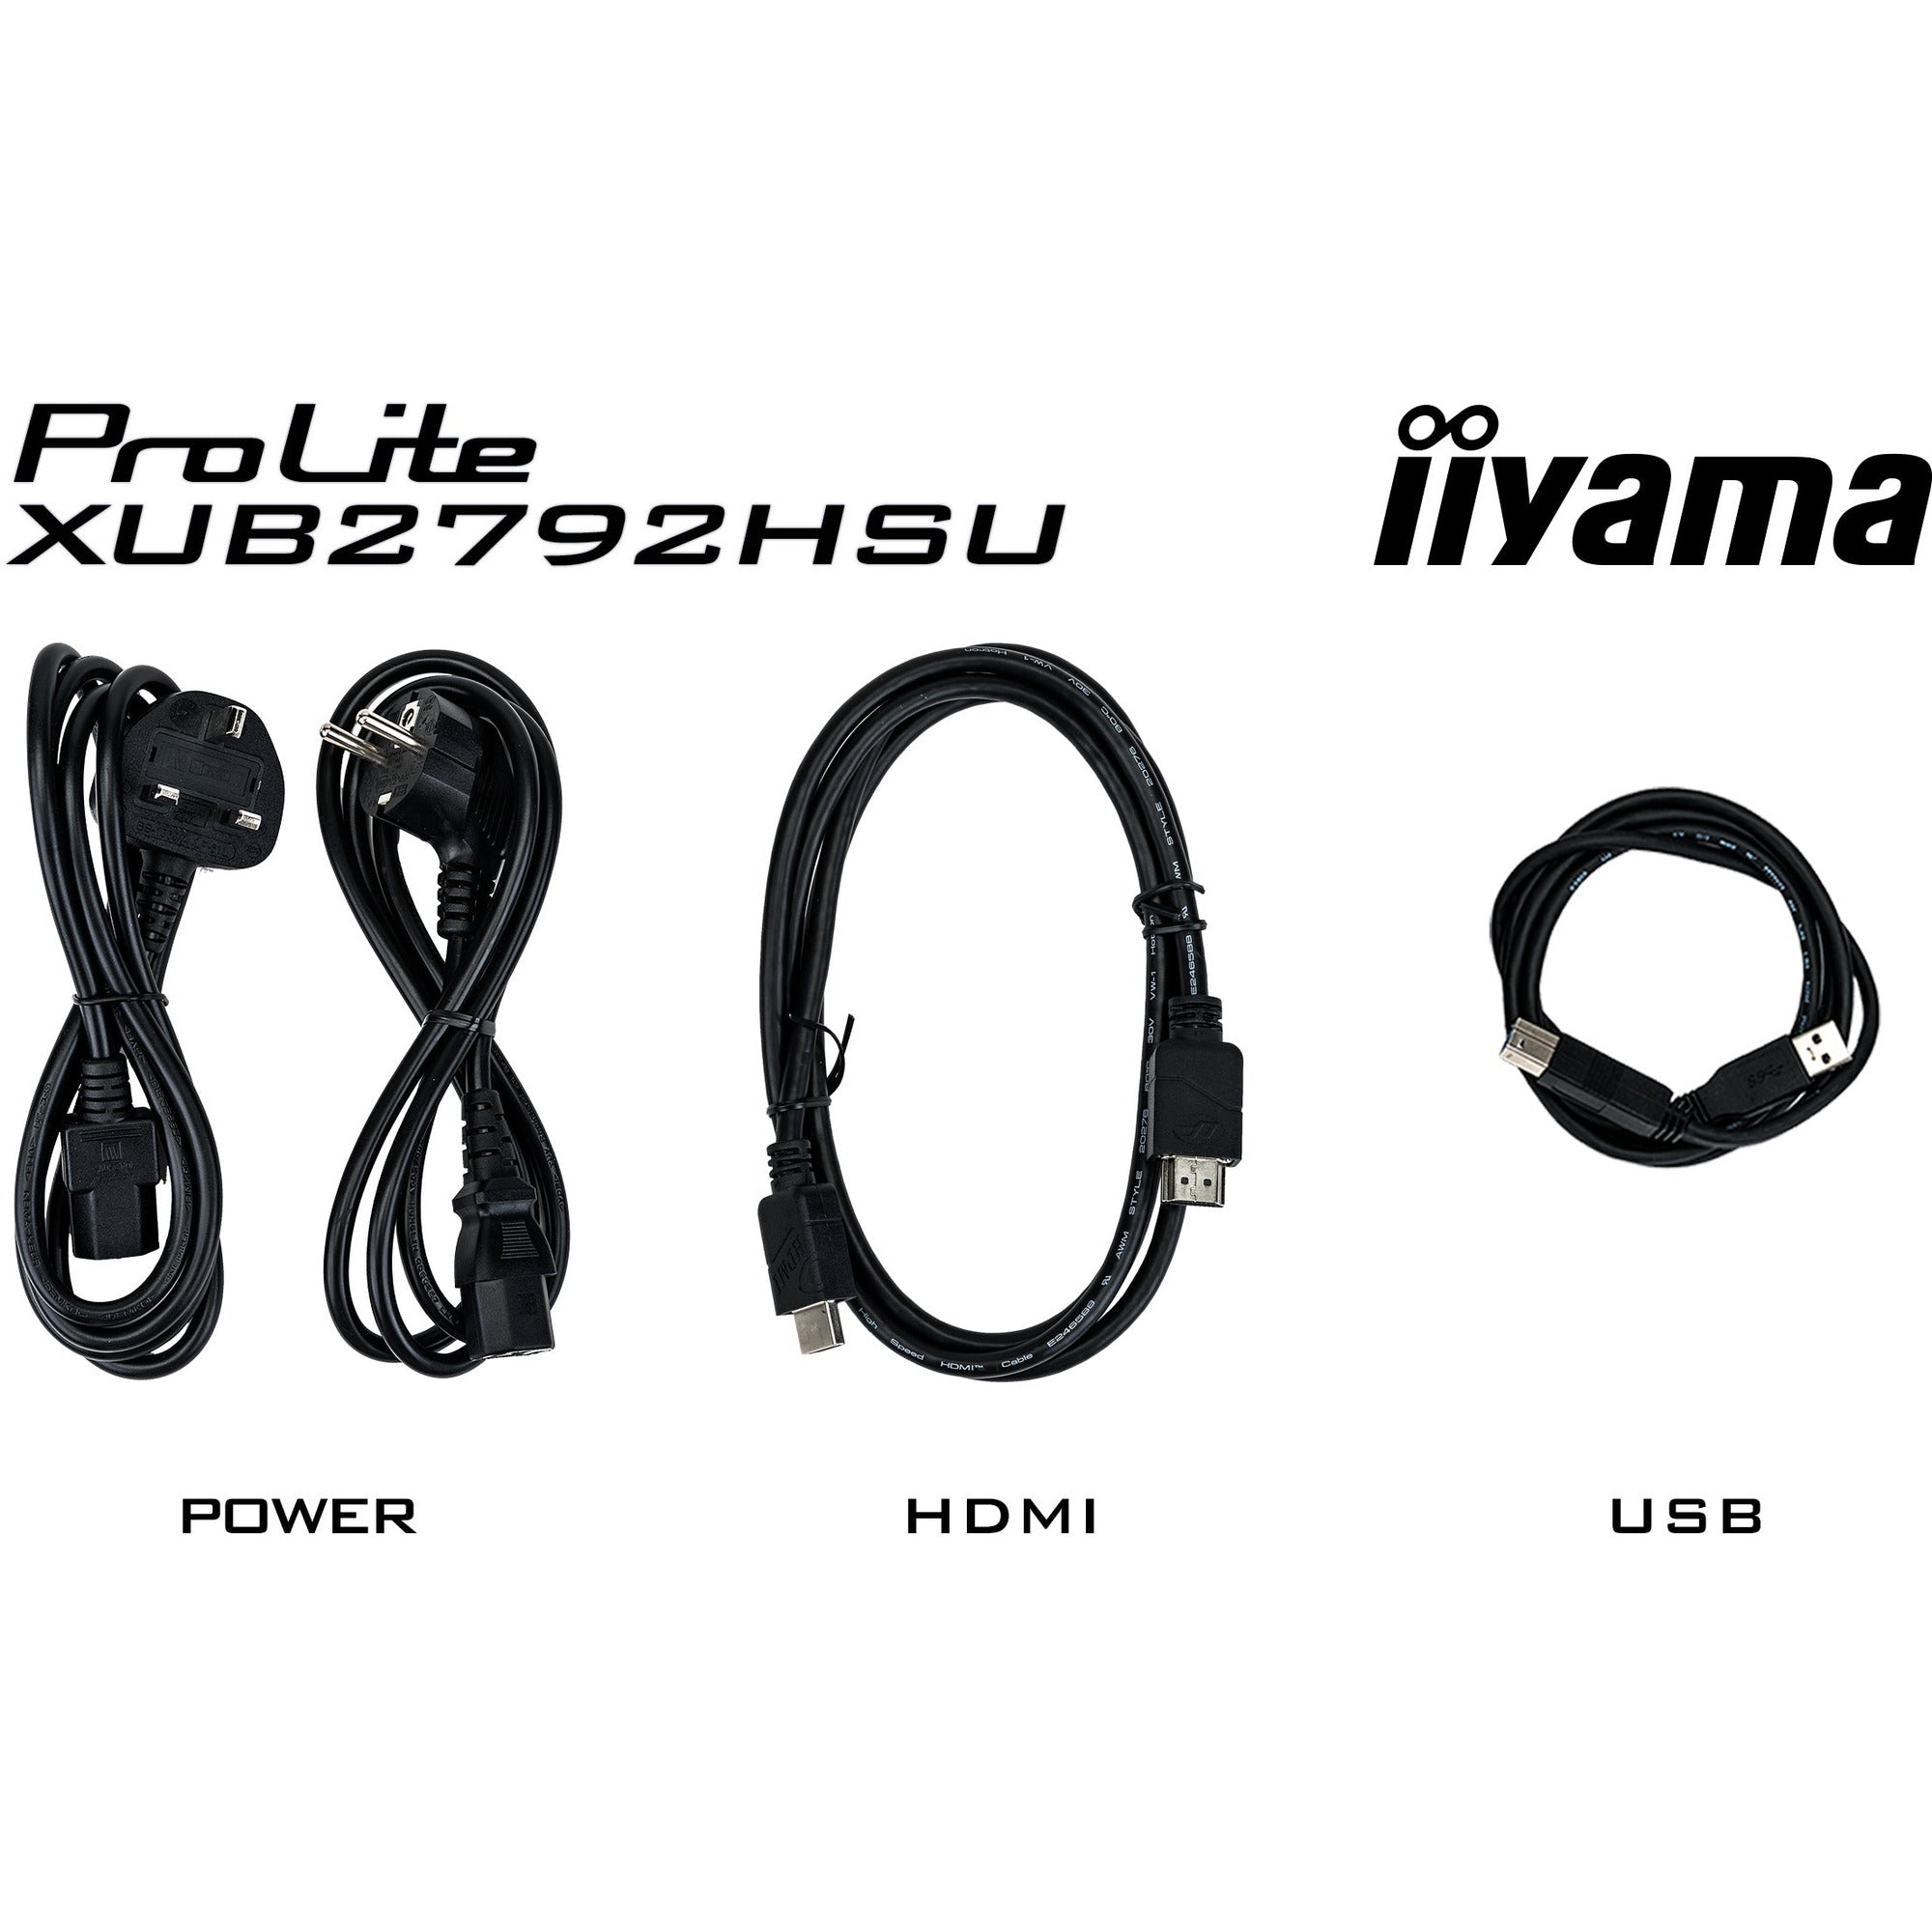 iiyama ProLite XUB2792HSU-B5 27” IPS monitor with Height Adjust Stand